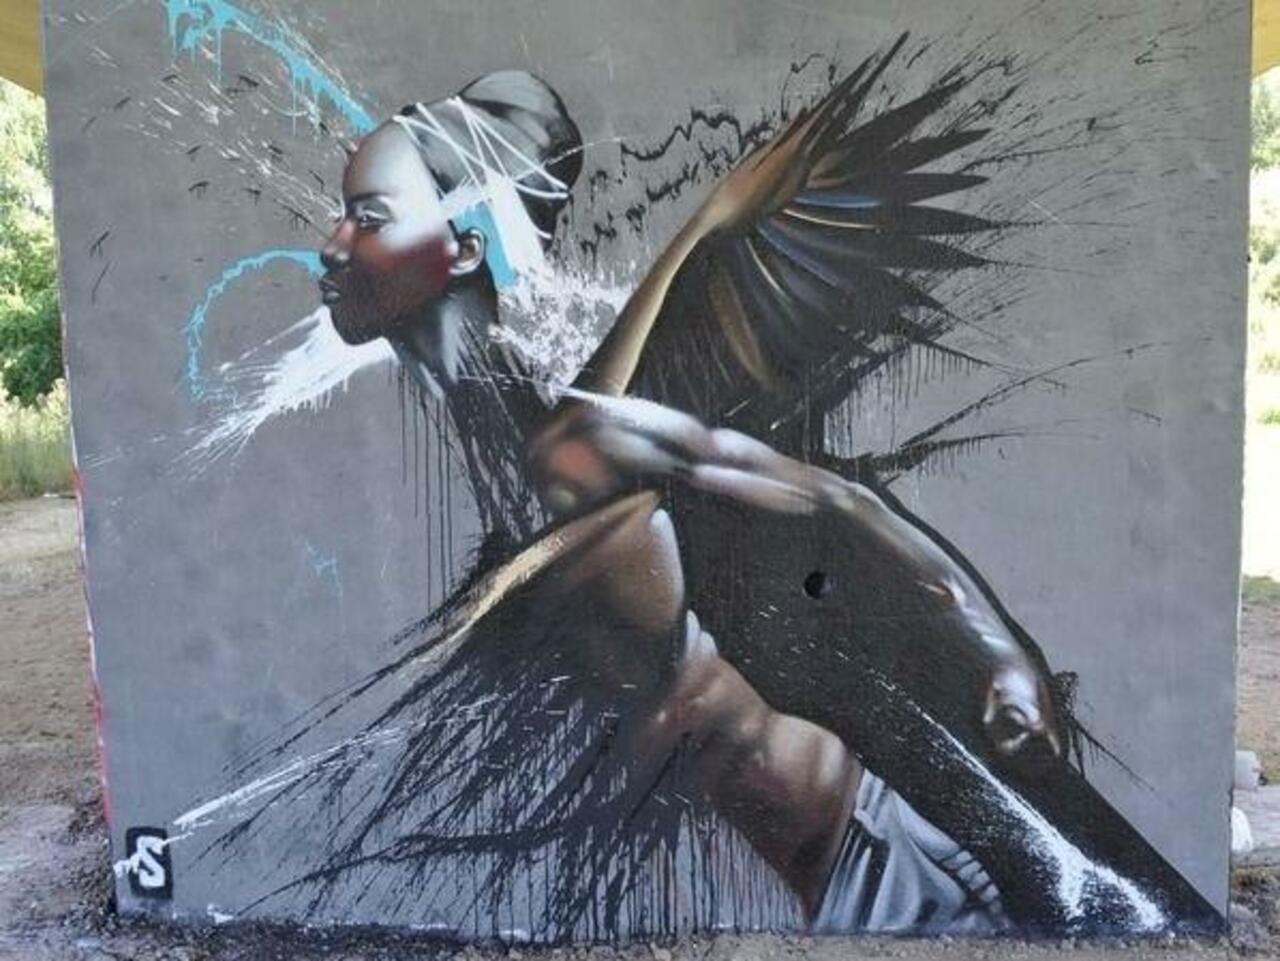 RT @5putnik1: Afro Phoenix  • #streetart #graffiti #art #afromental #funky #dope . : http://t.co/pfkDXUa6xv